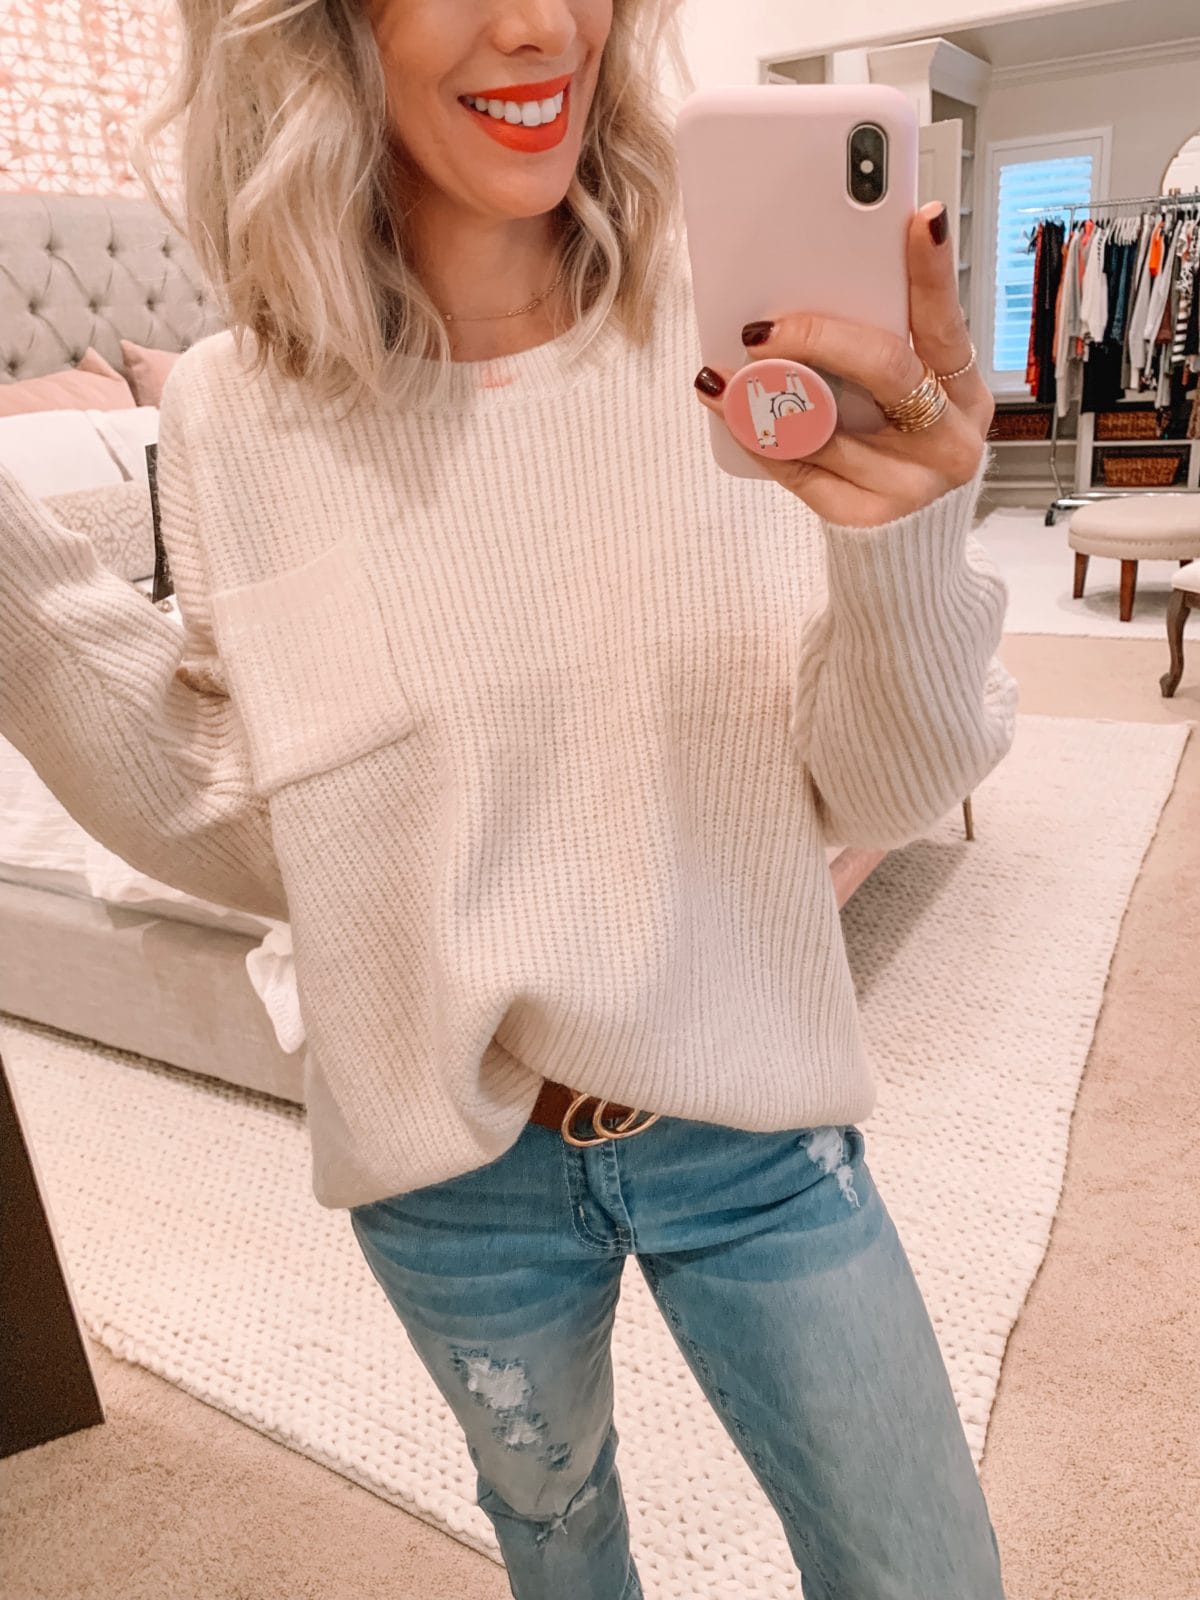 Amazon Prime Fashion-Beige Sweater